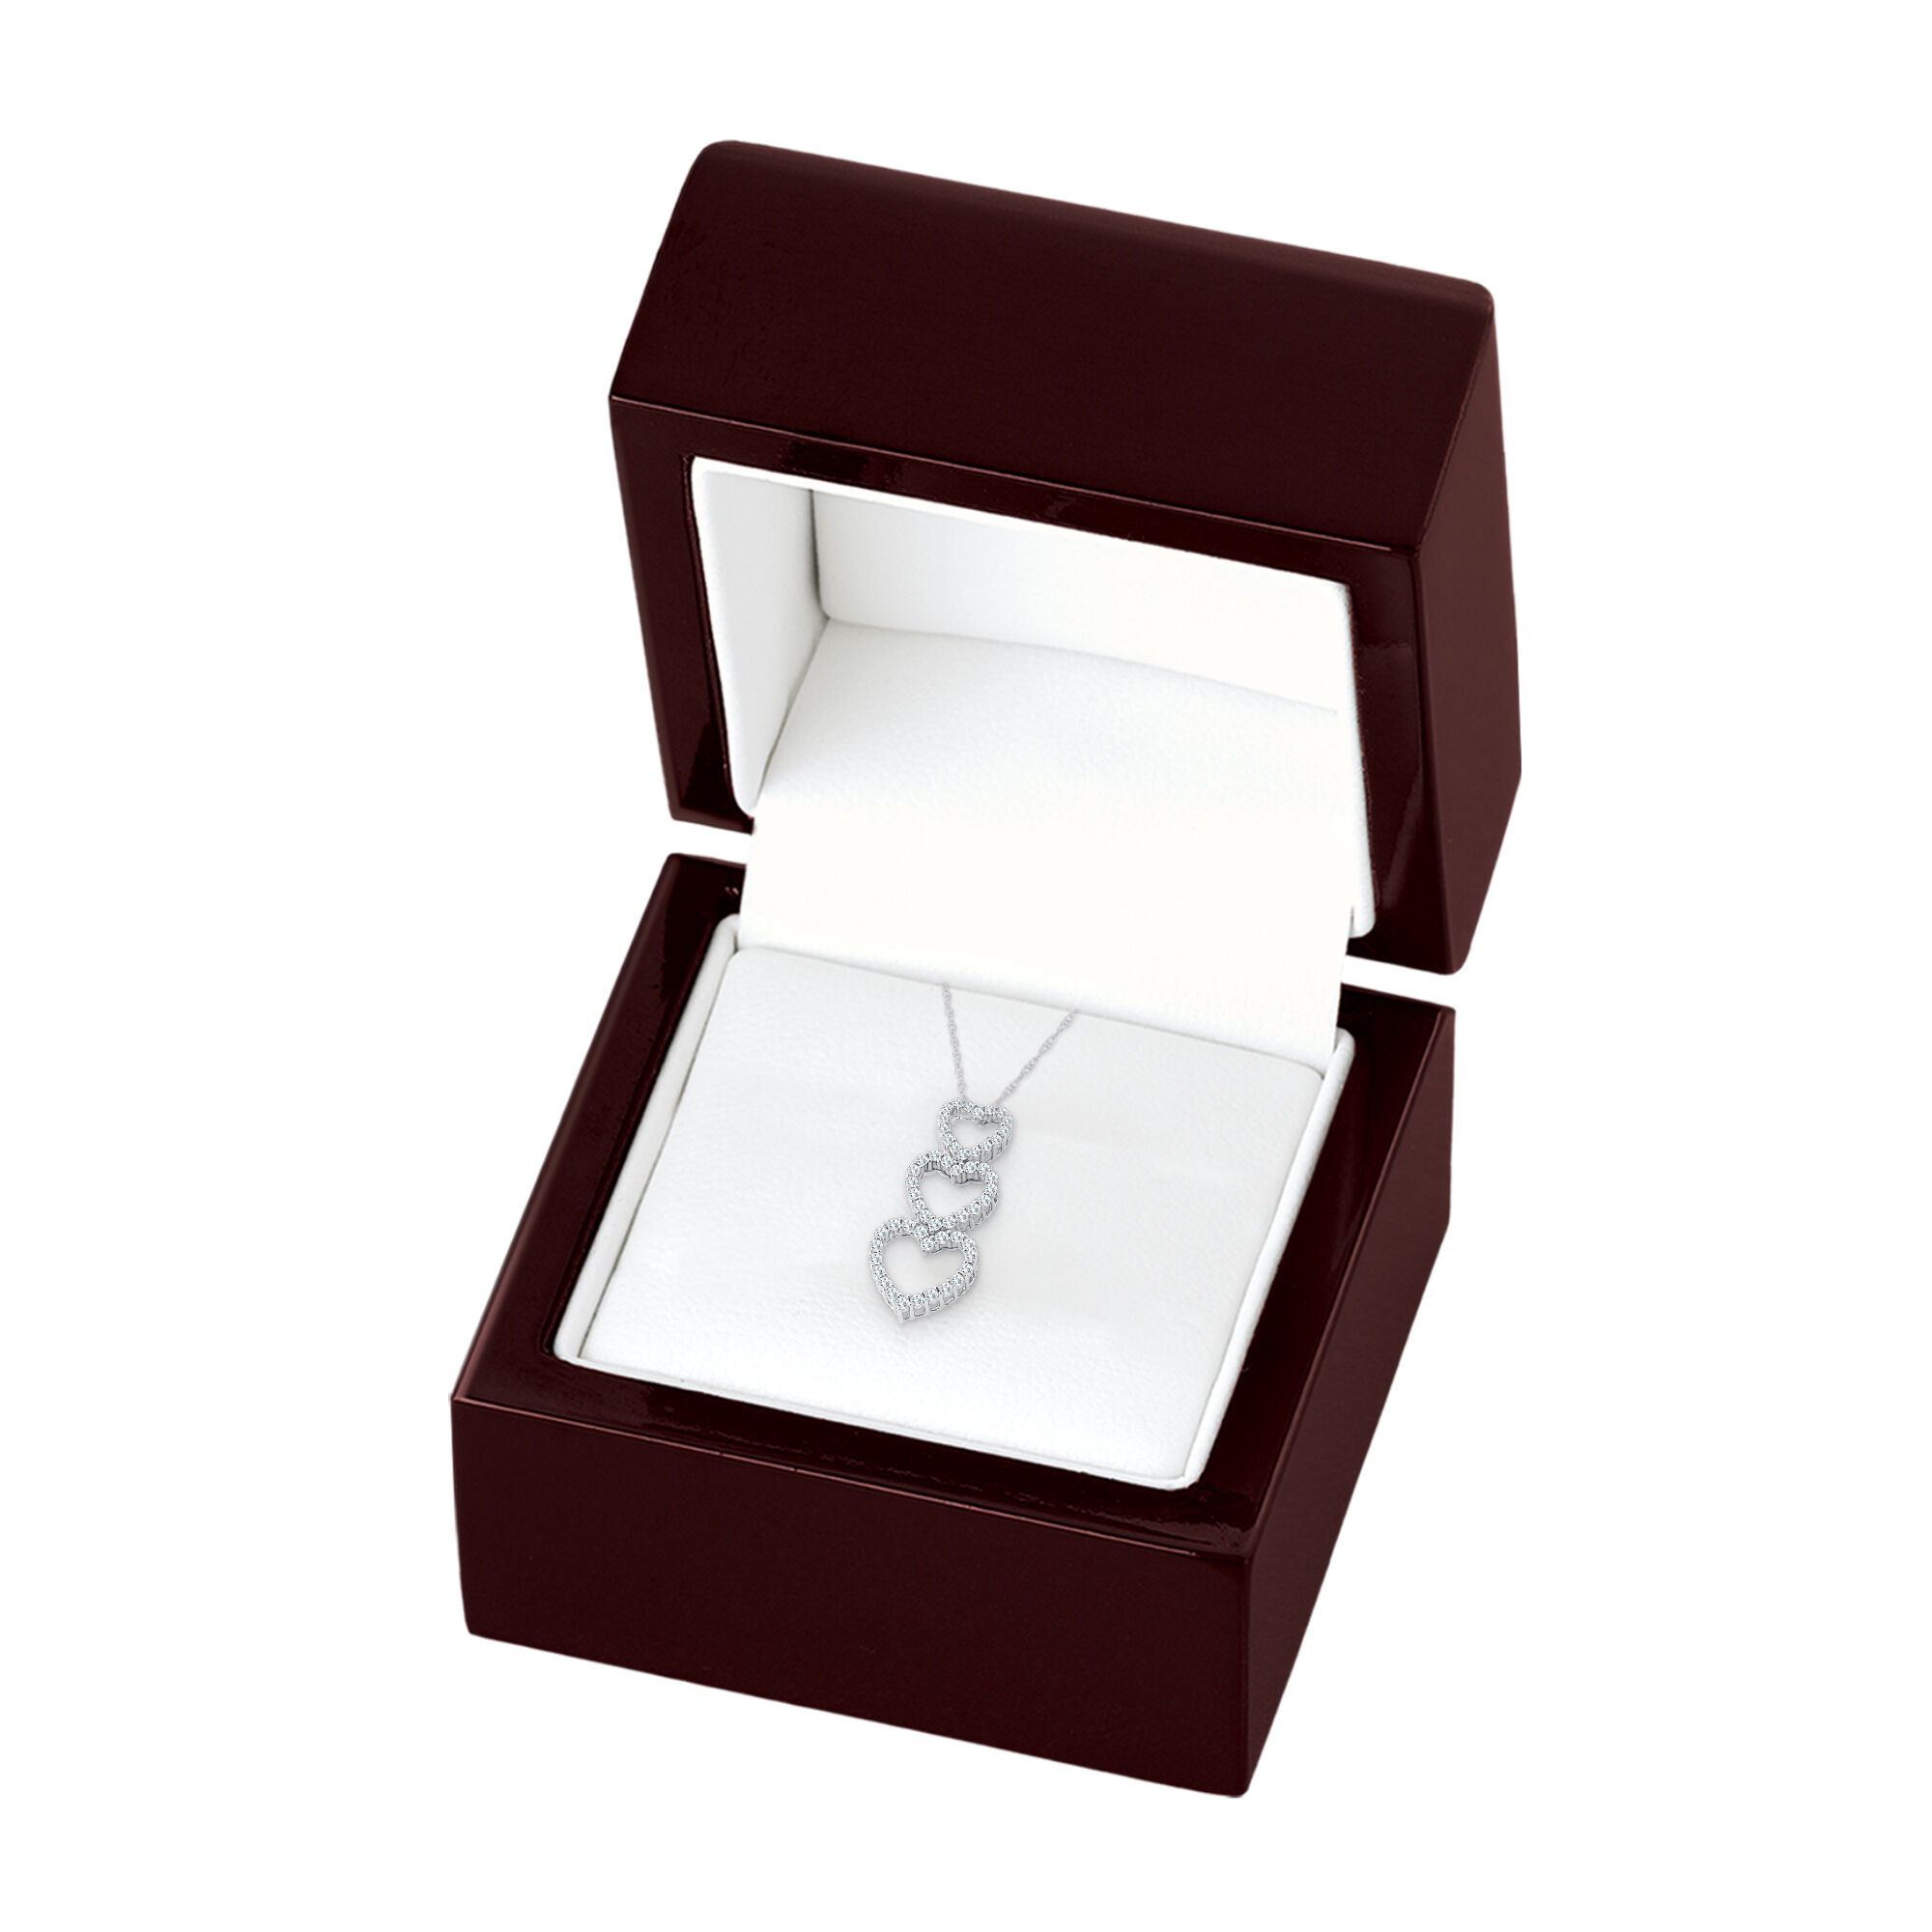 True Love Diamond 14kt Gold Pendant 10568 0011 g gift box